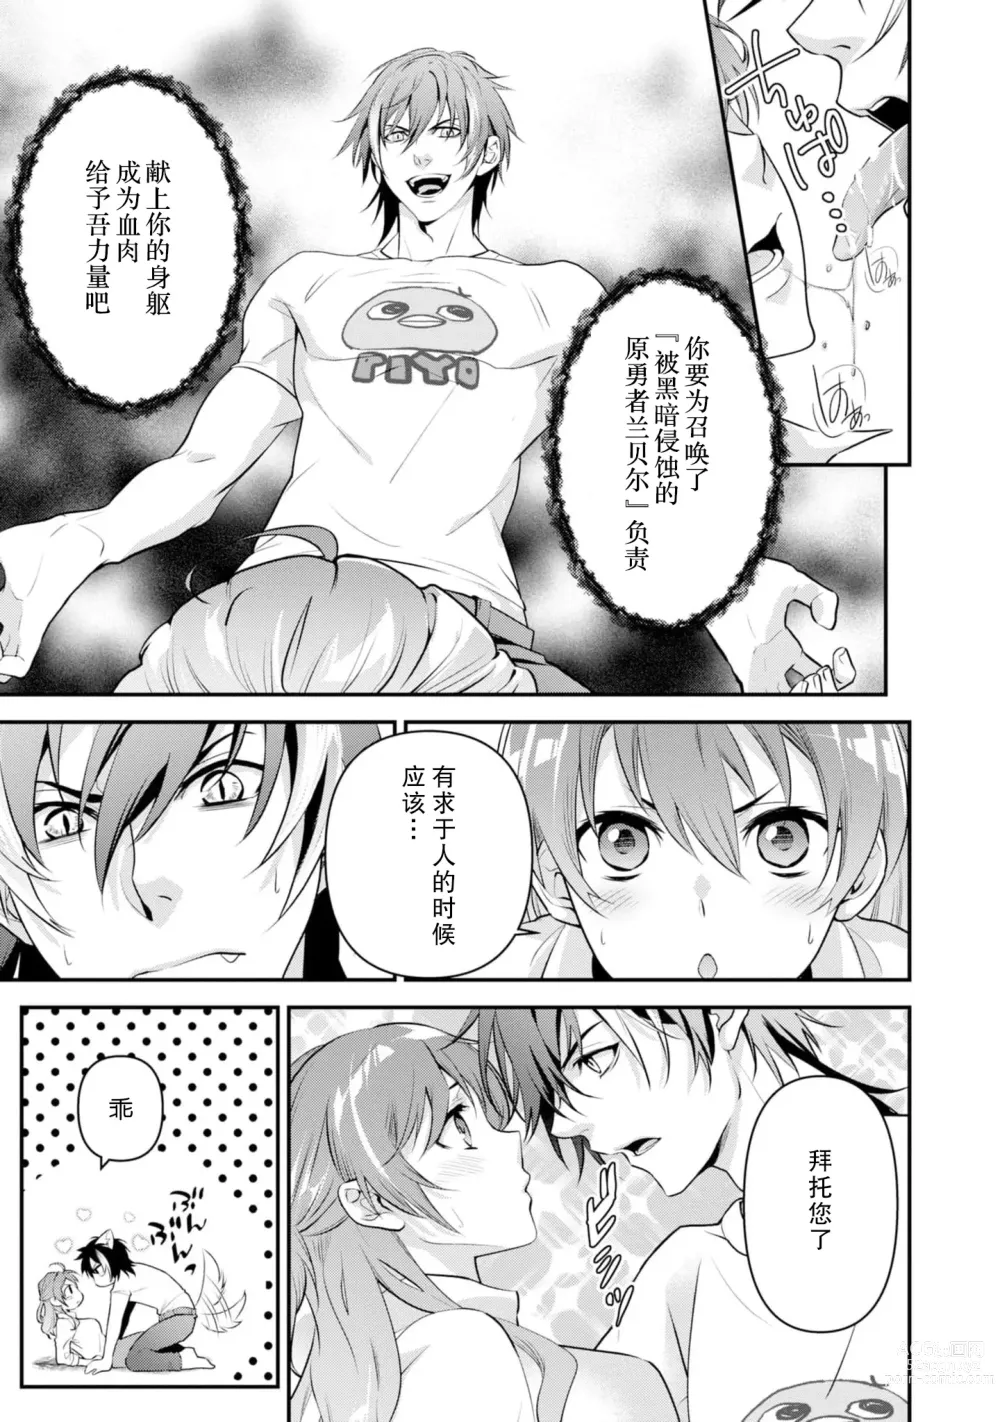 Page 6 of manga 最终BOSS转生而来，因此拿下了他的童贞 1-9 end